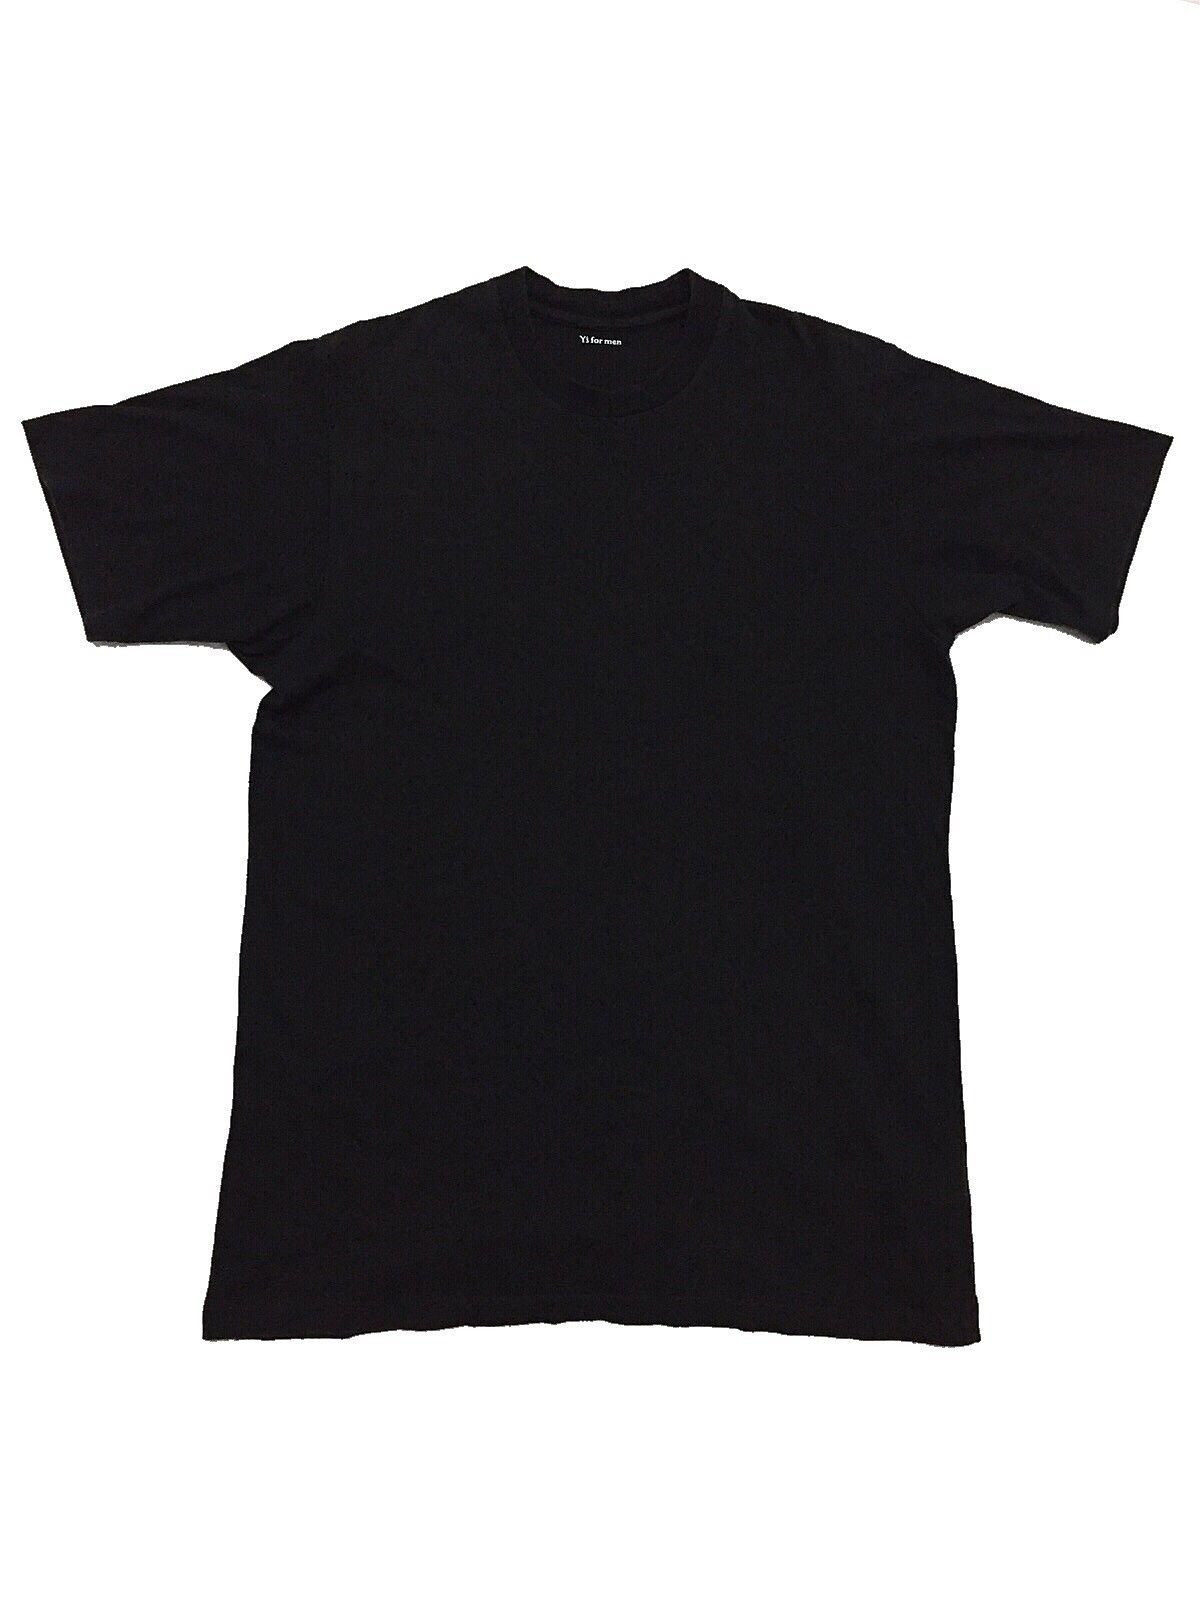 Y’s For Men Plain Made In Japan Black T-shirt - 1